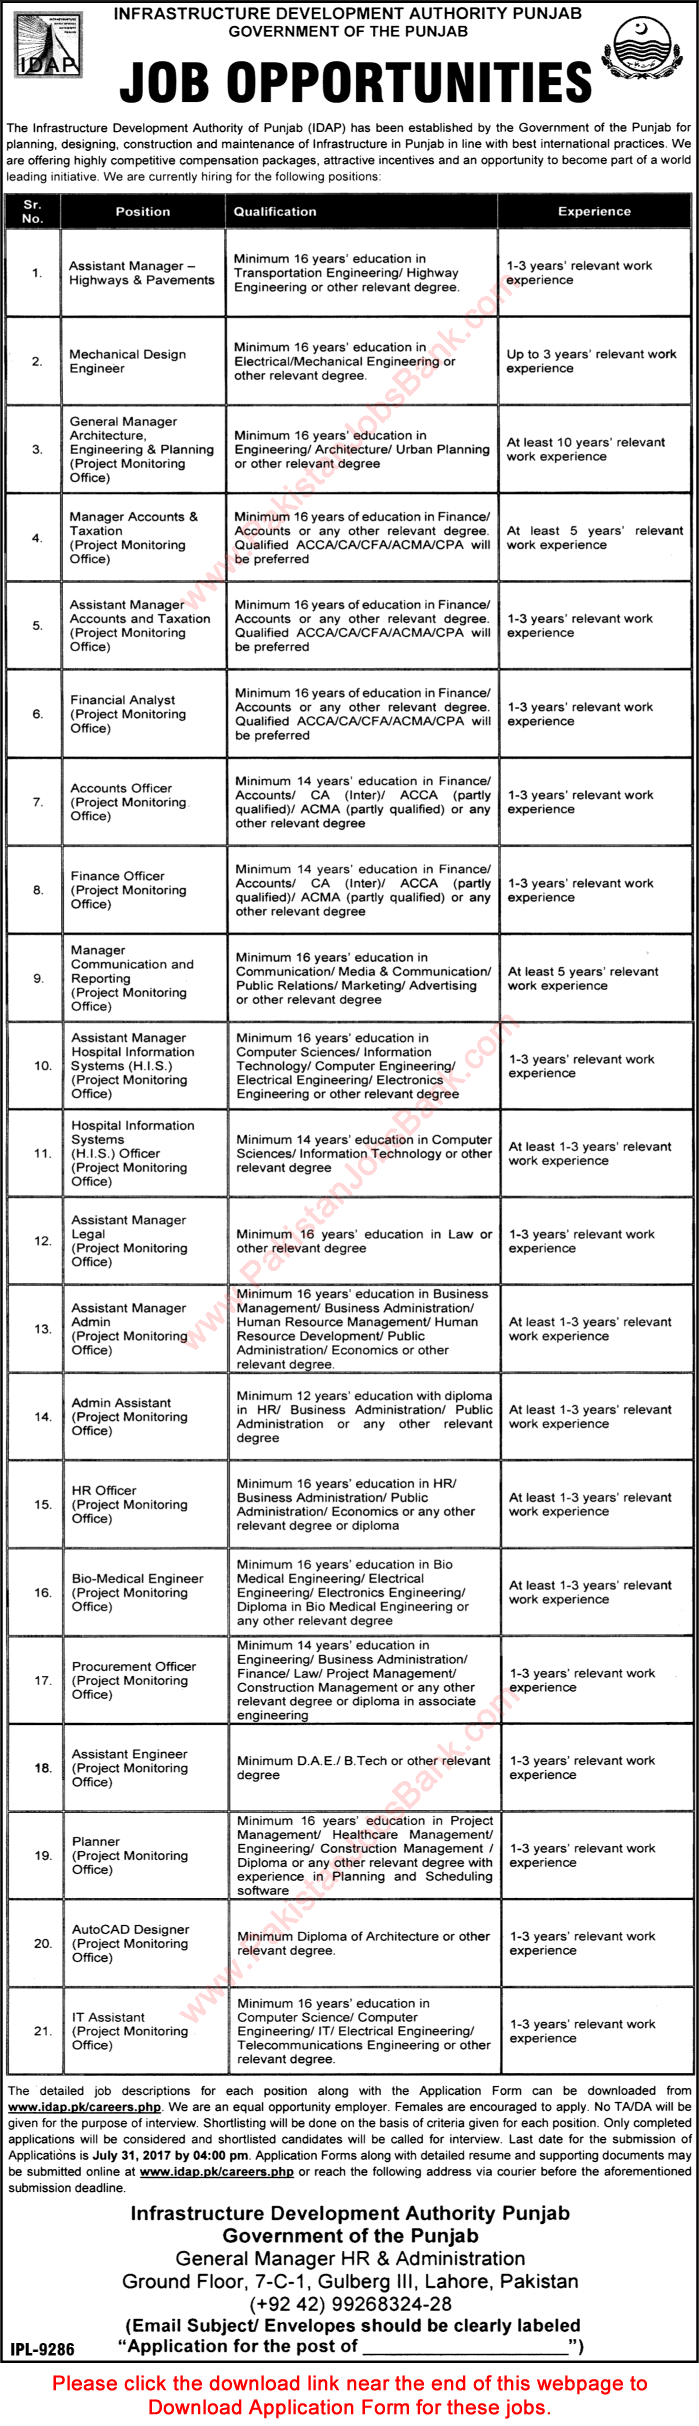 Infrastructure Development Authority Punjab Jobs July 2017 Application Form Download IDAP Latest